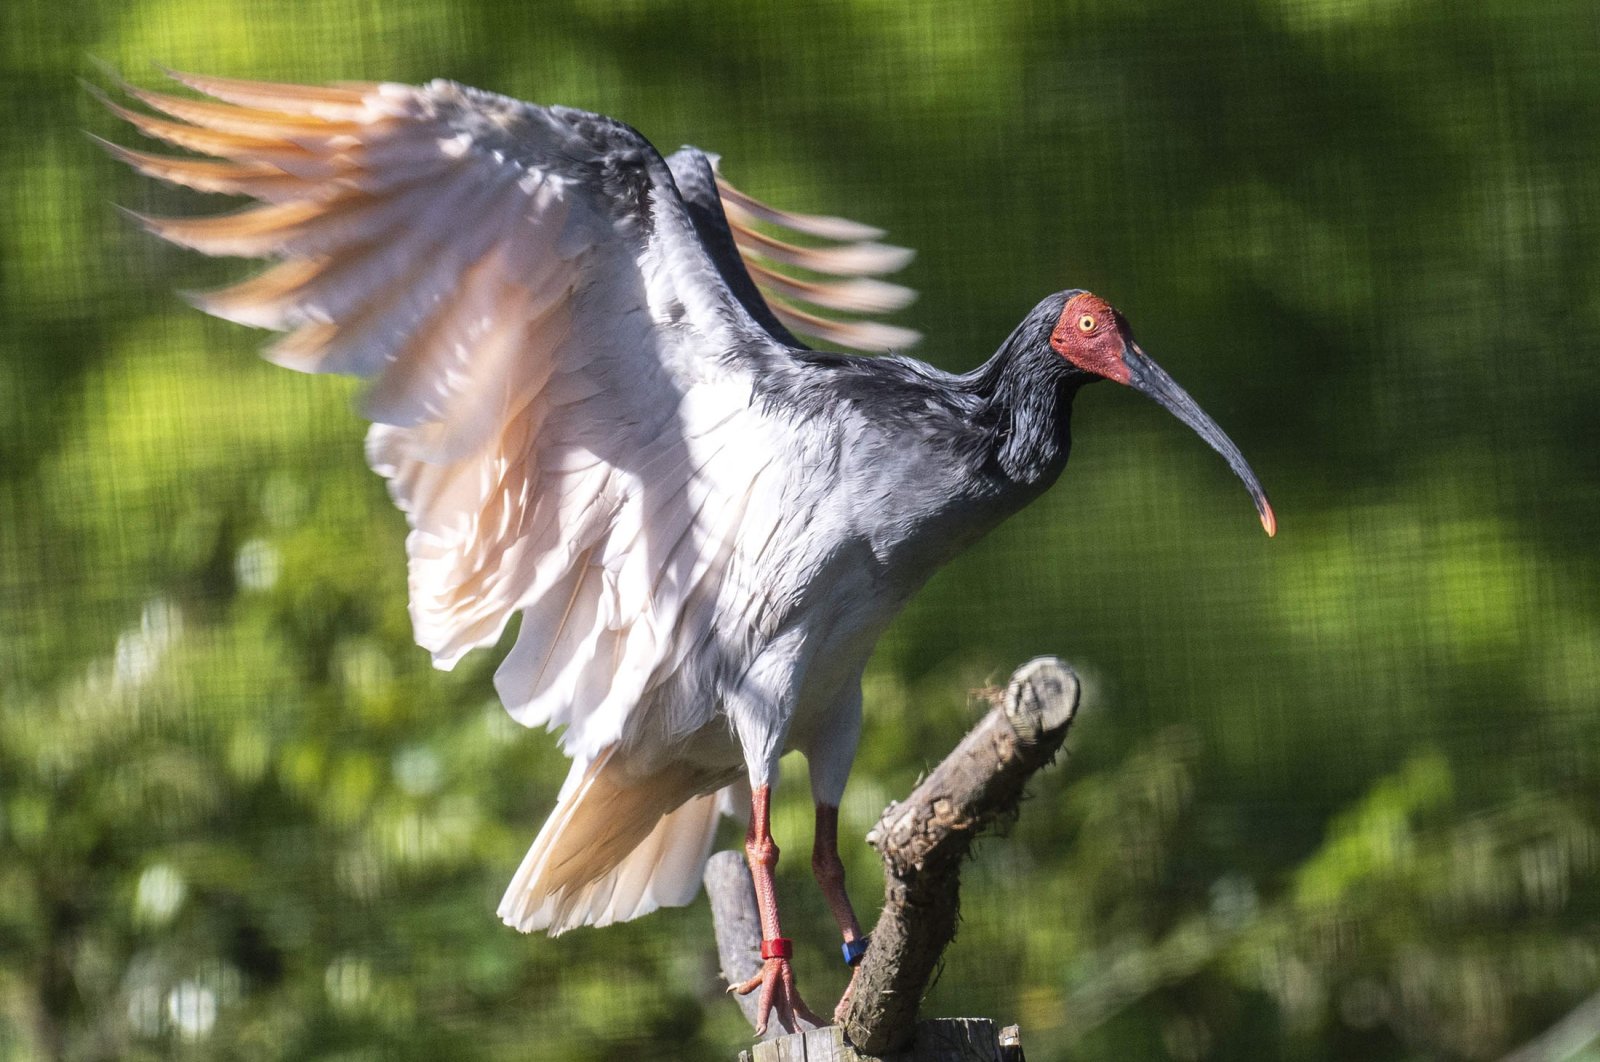 Bangkit dari abu: Burung Jepang kembali dari kepunahan seperti phoenix